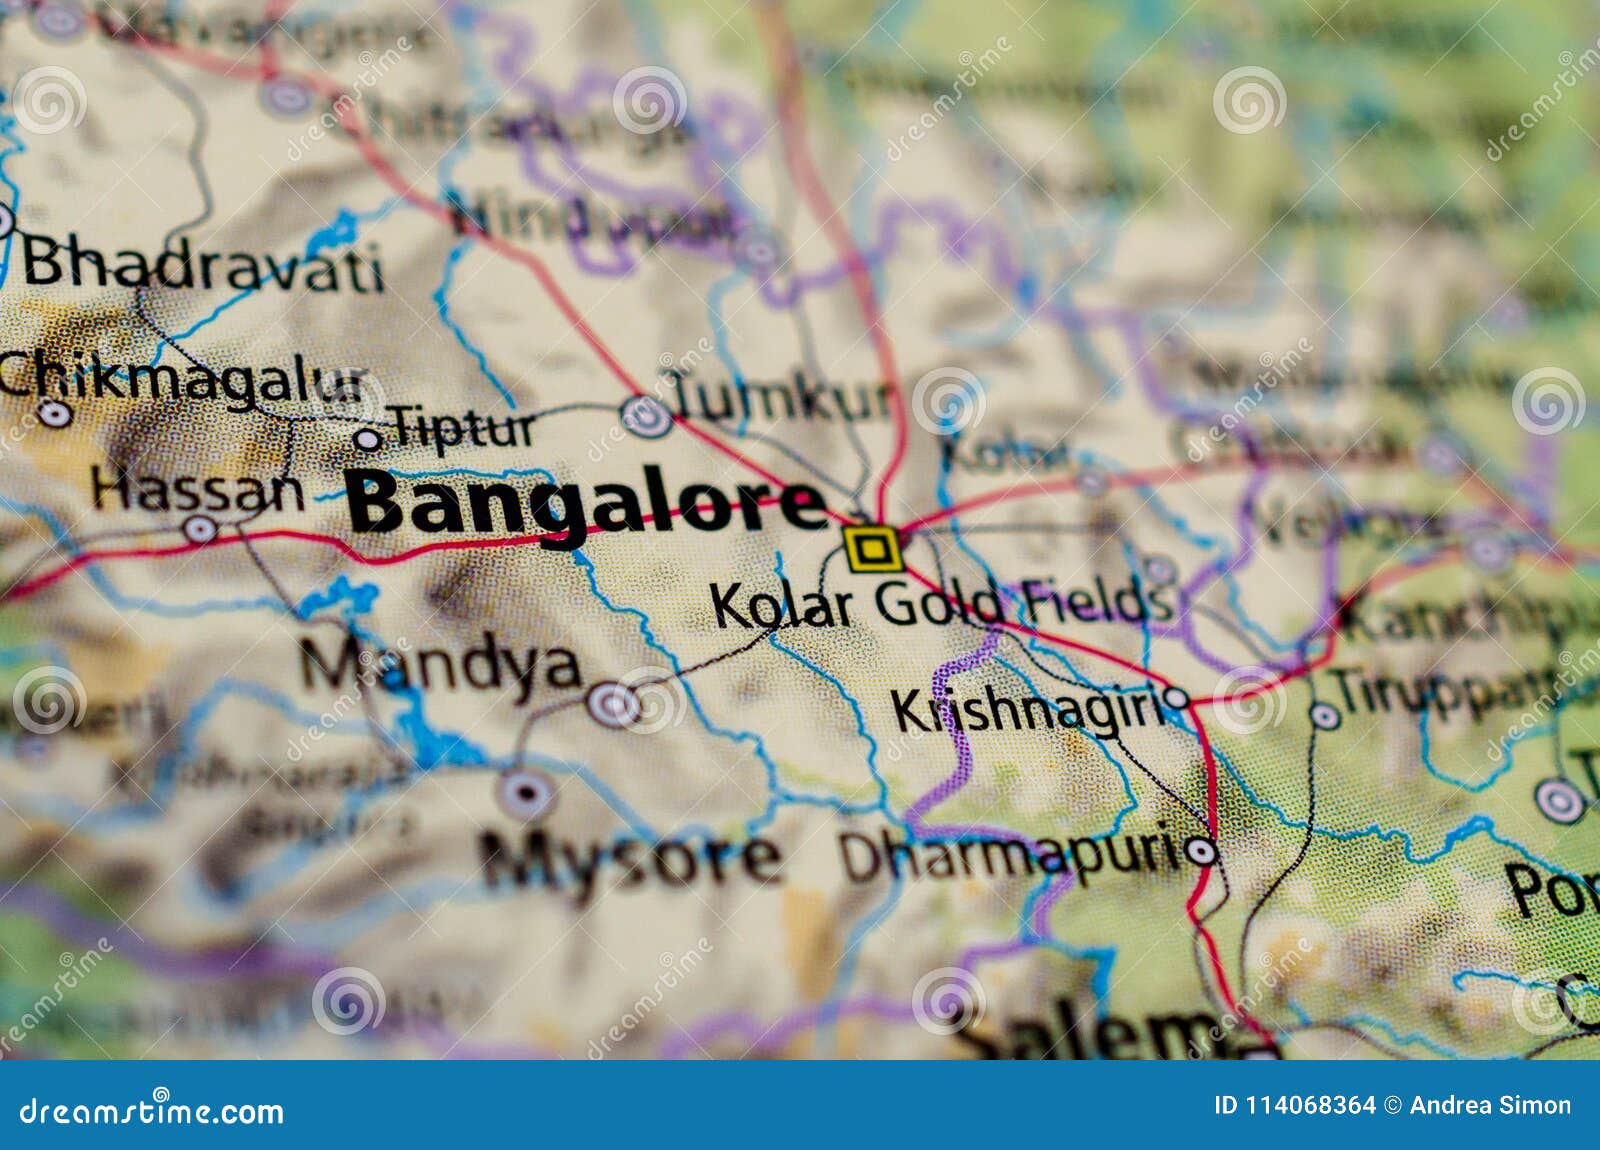 bangalore or bengaluru on map